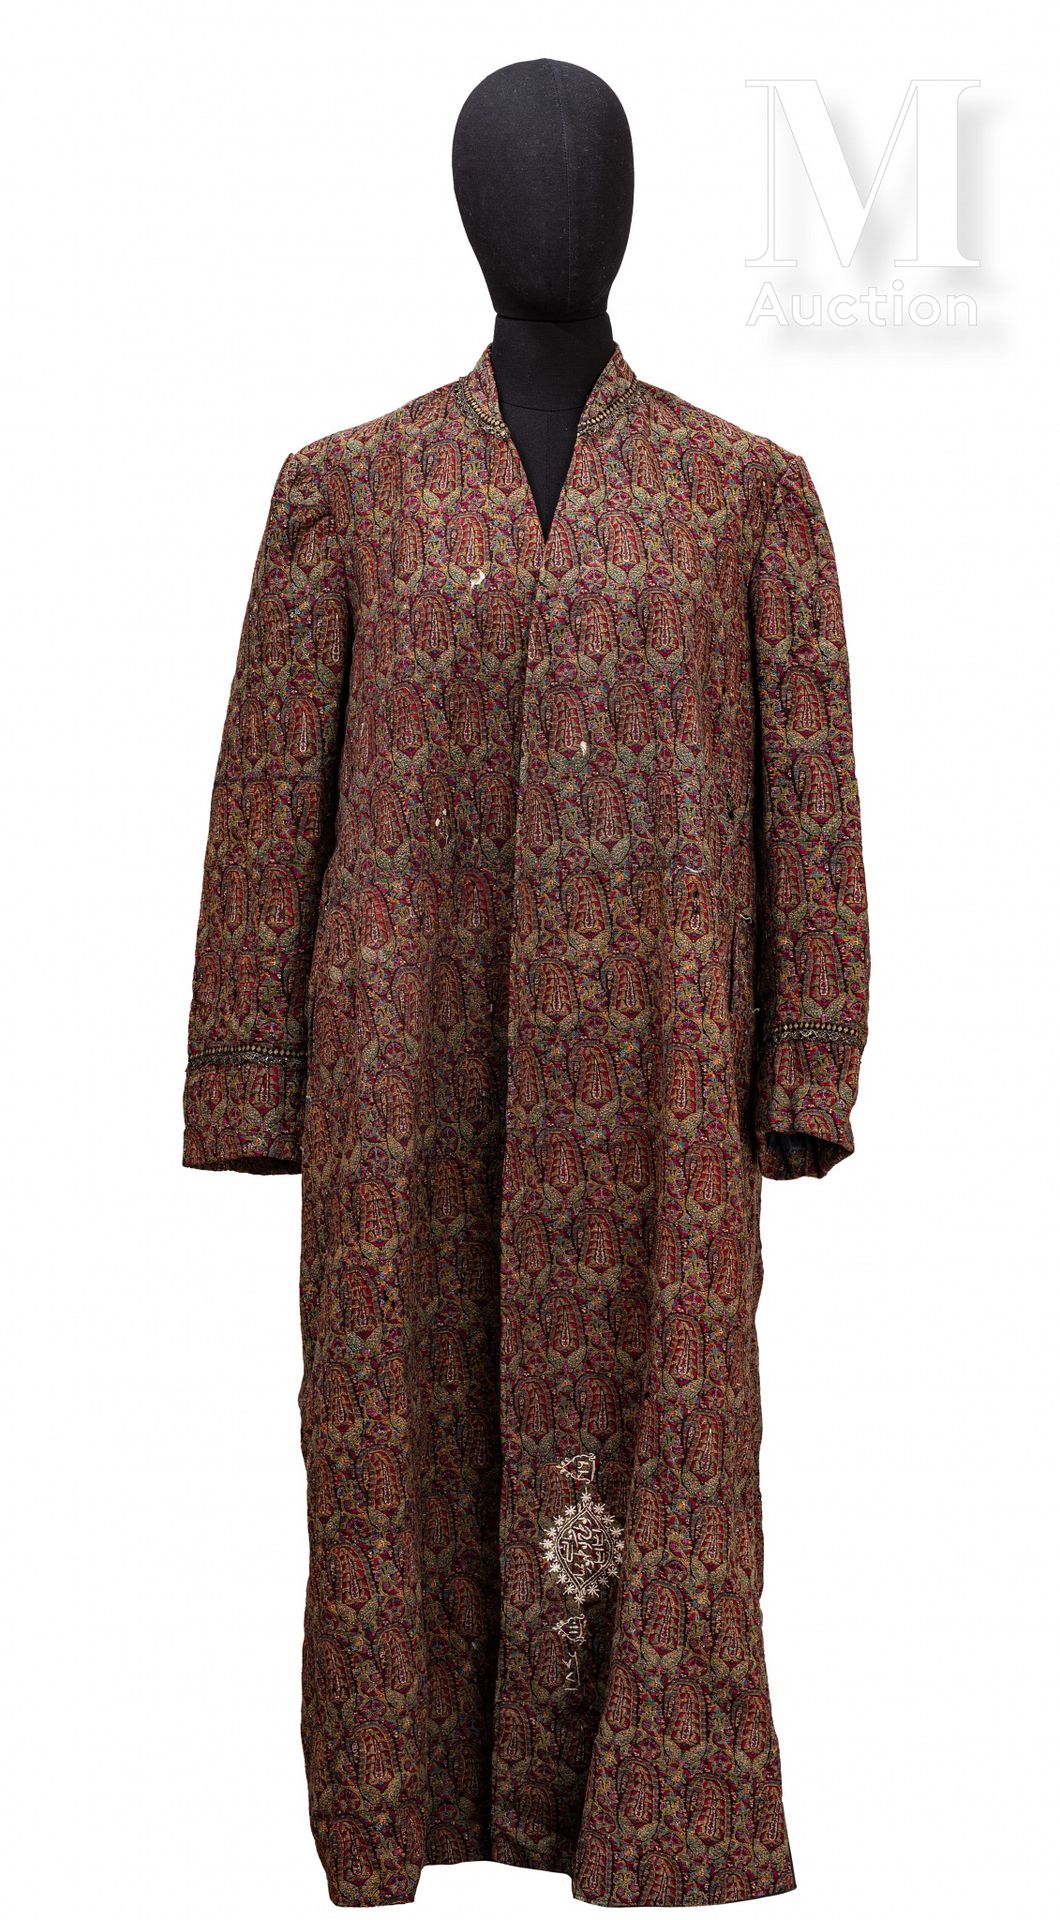 Manteau Qajar Iran, 19. Jahrhundert

Jahrhundert. Gewebtes Kleidungsstück aus Wo&hellip;